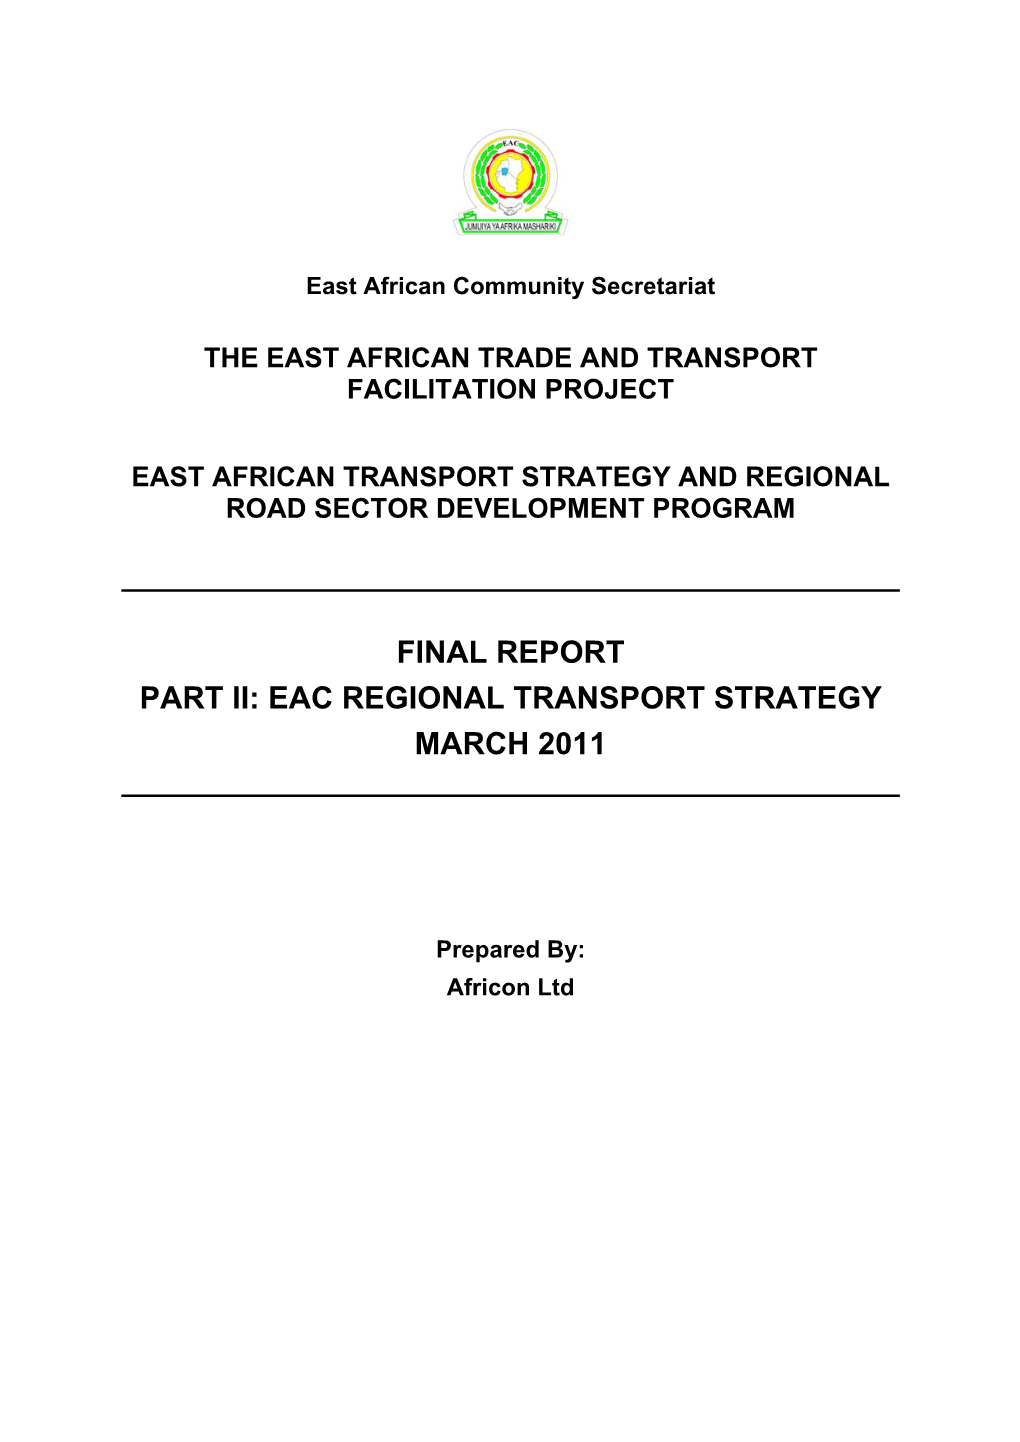 Eac Regional Transport Strategy March 2011